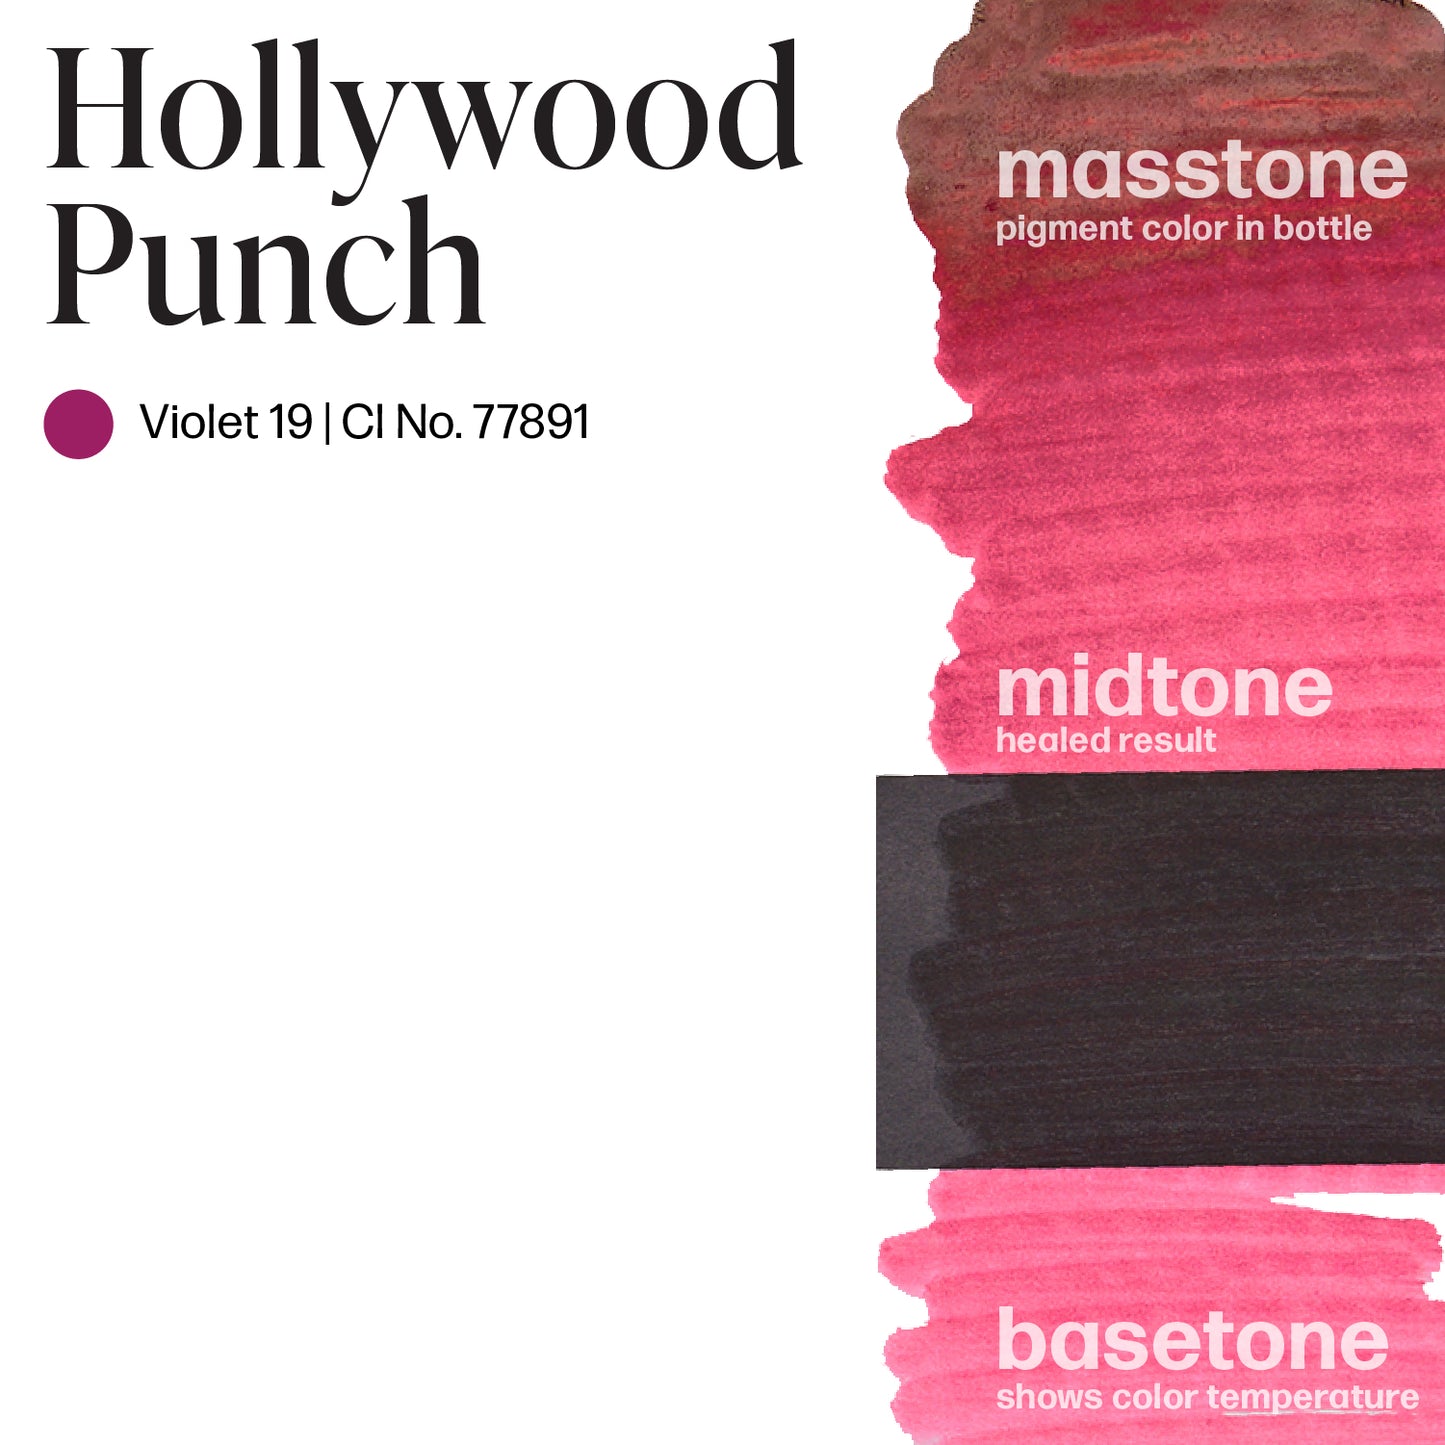 Hollywood Punch — Perma Blend — 1/2oz Bottle